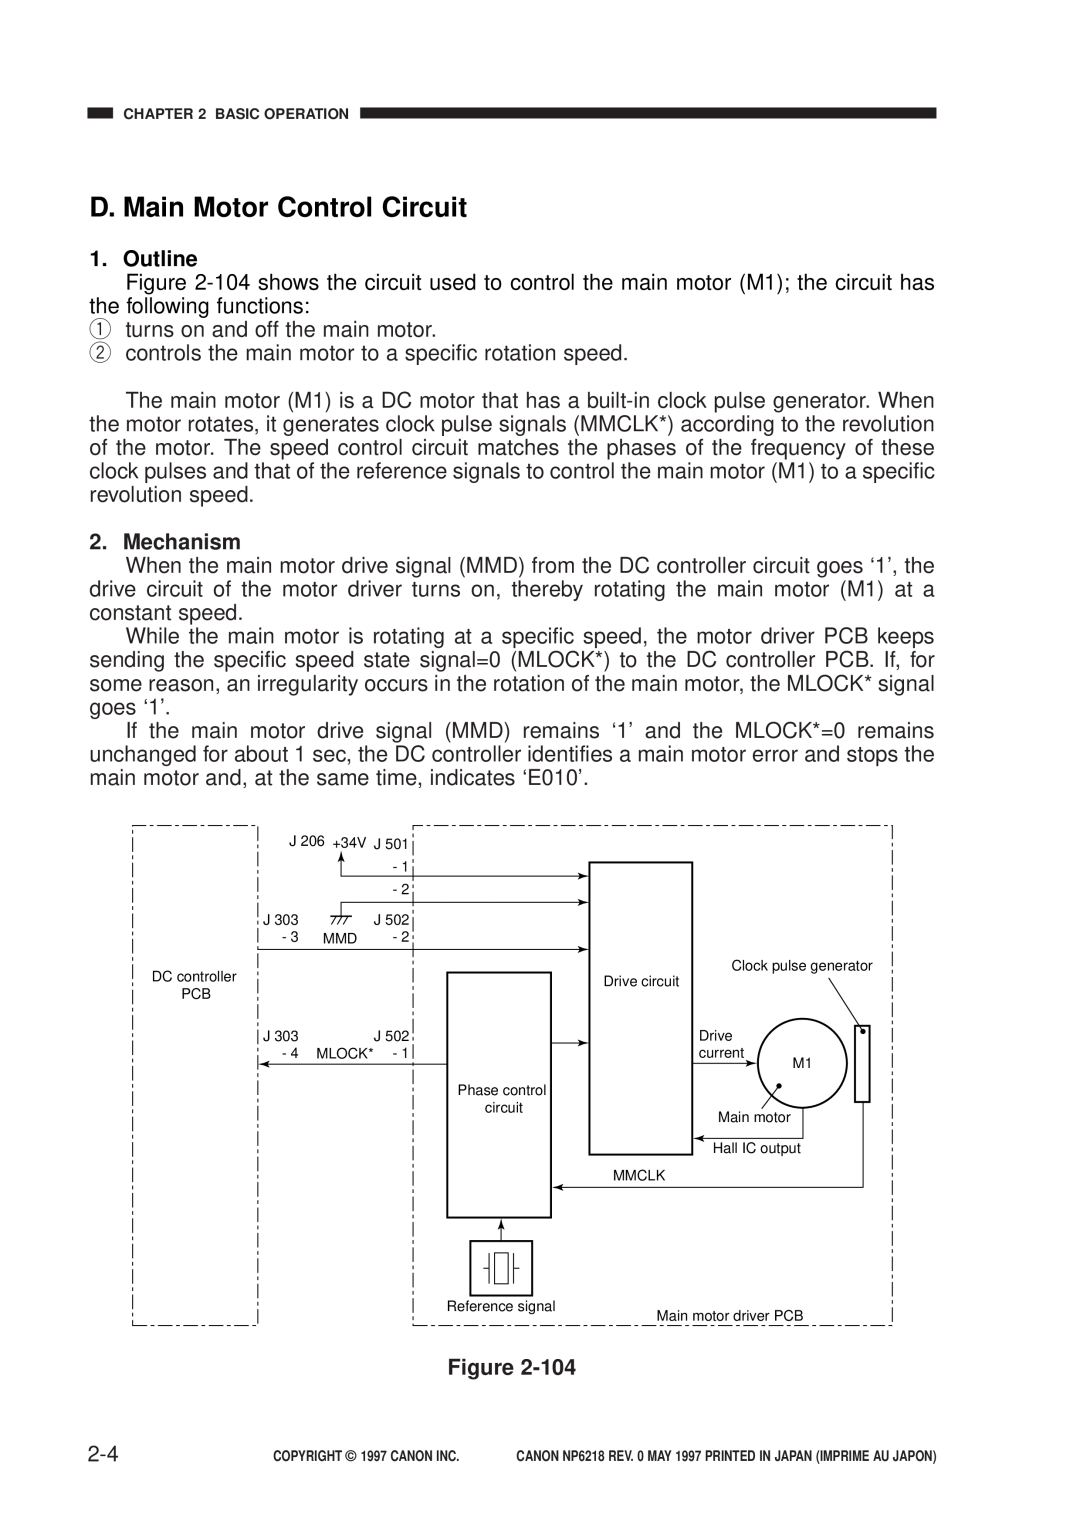 Canon NP6218, FY8-13EX-000 service manual D. Main Motor Control Circuit, Mechanism, Outline 